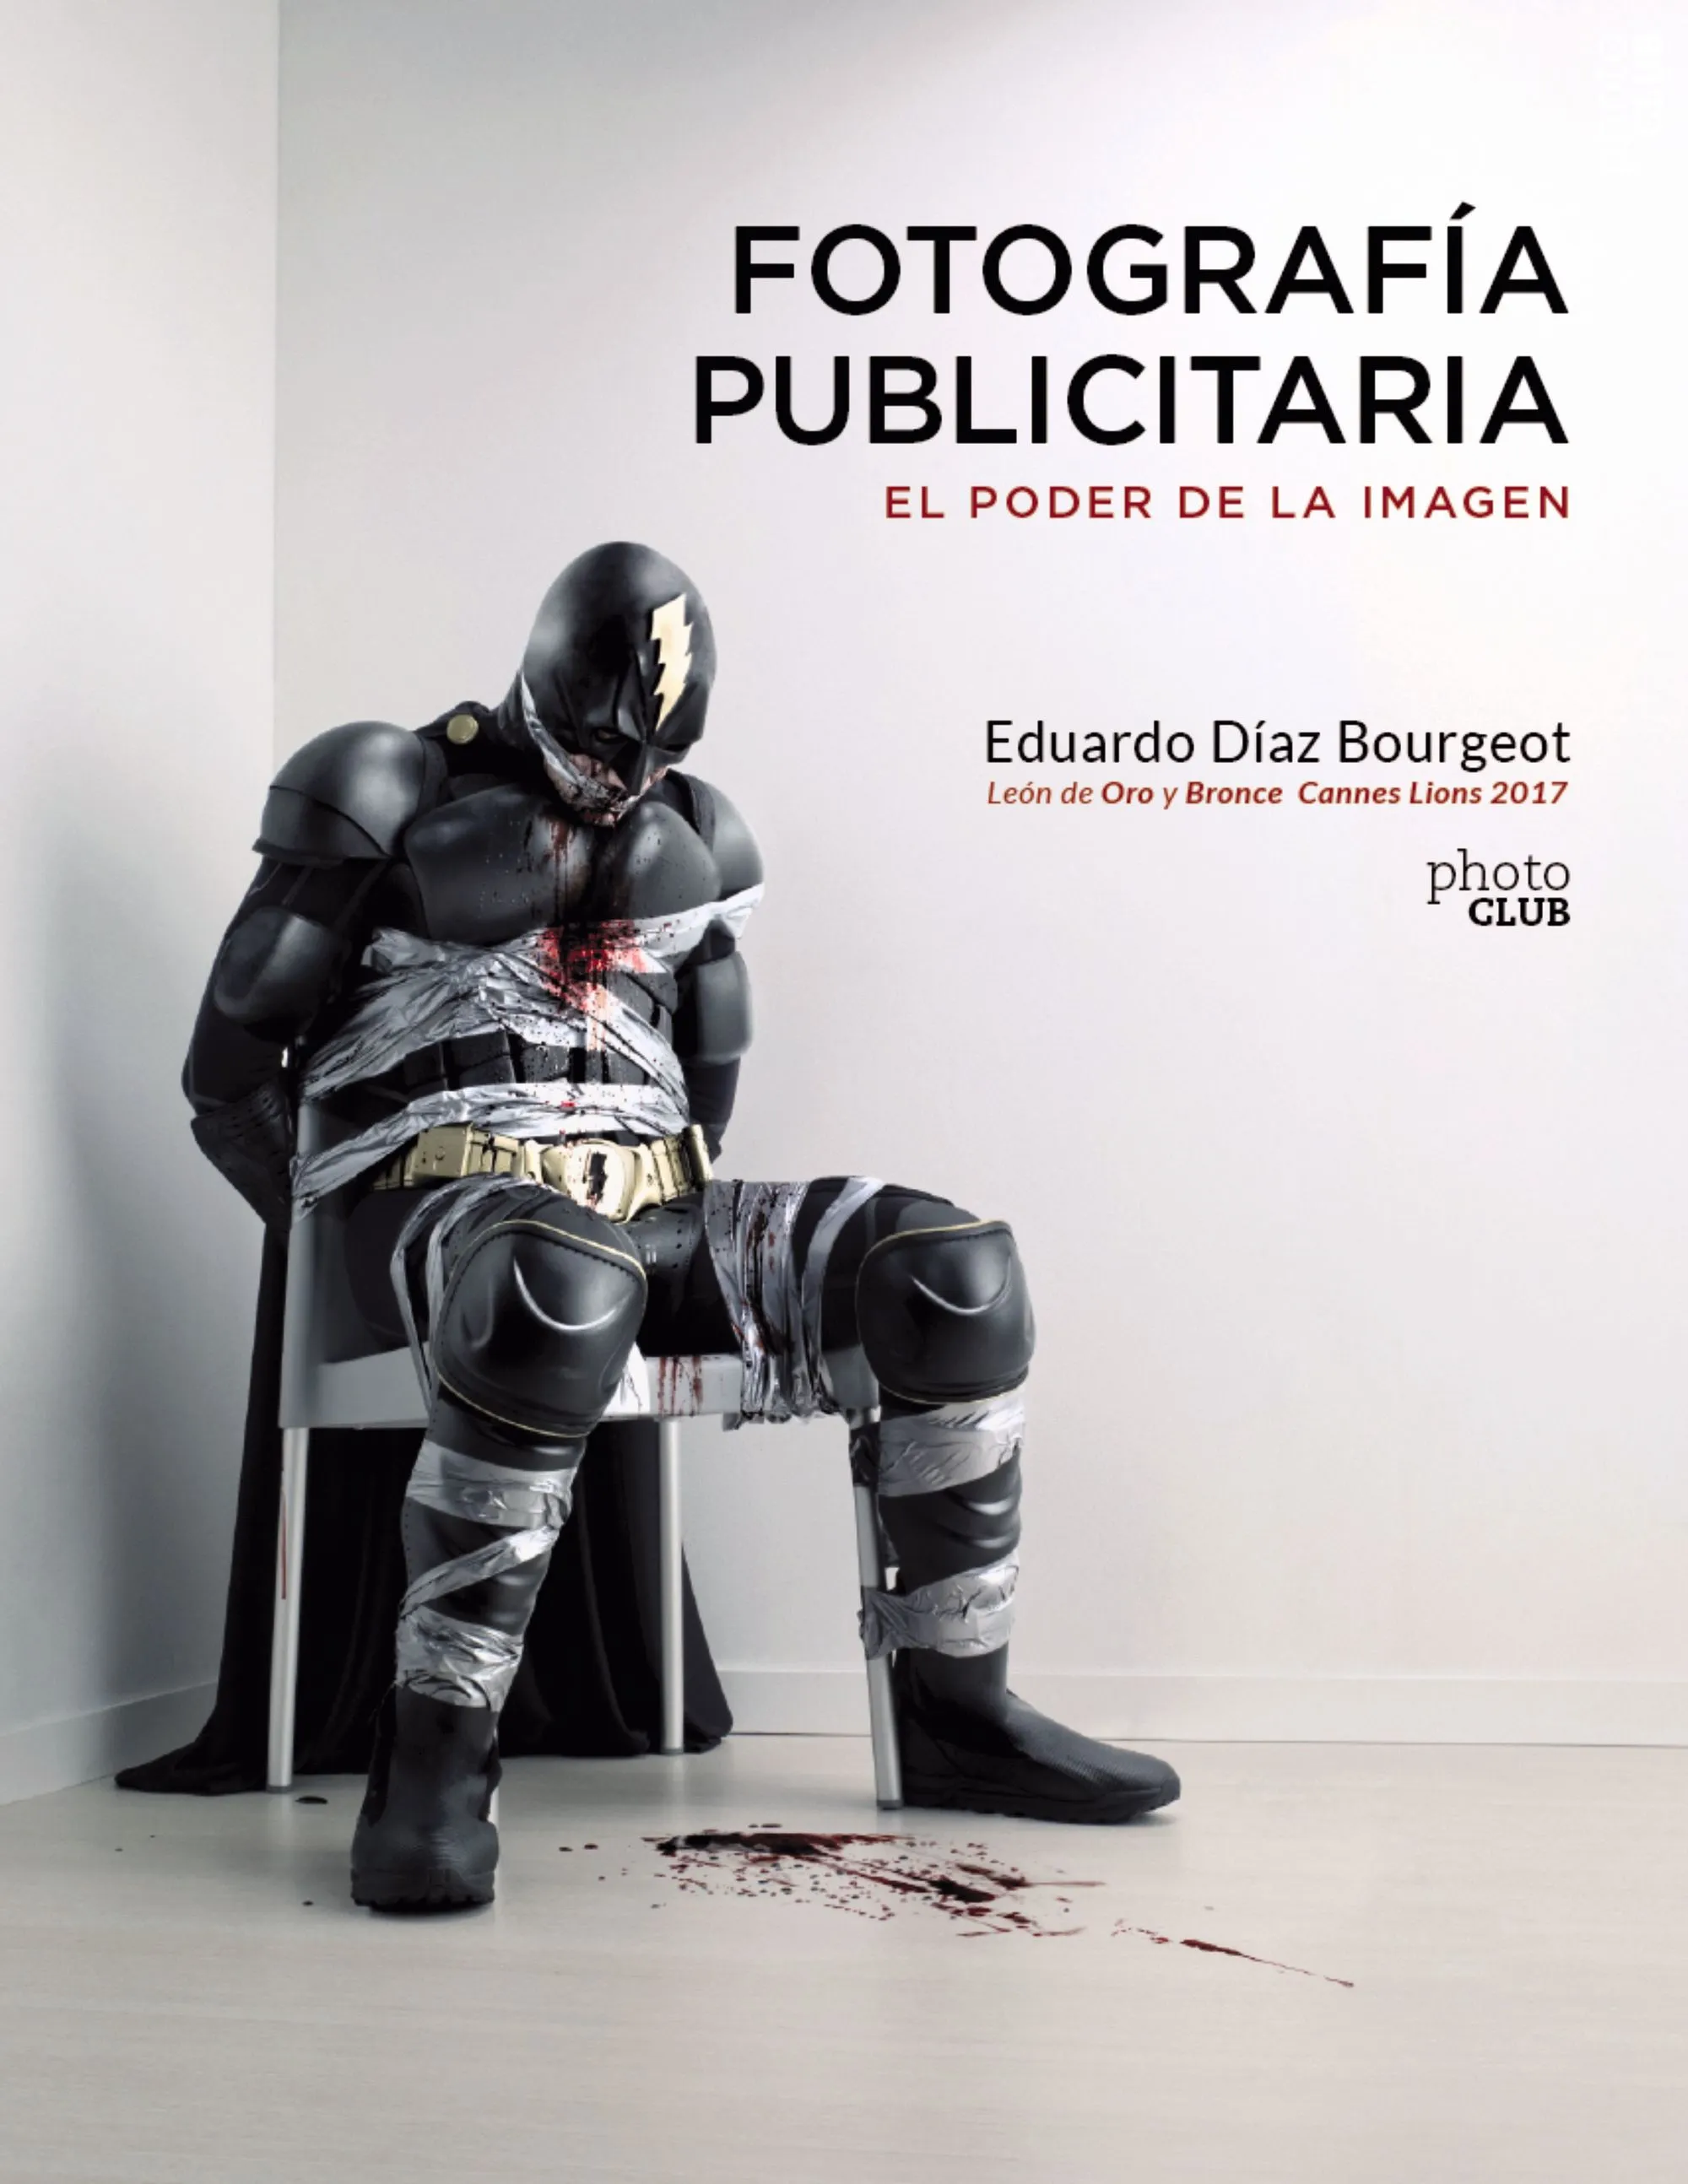 Fotografía publicitaria El poder de la imagen, Eduardo Díaz Bourgeot, 2017.